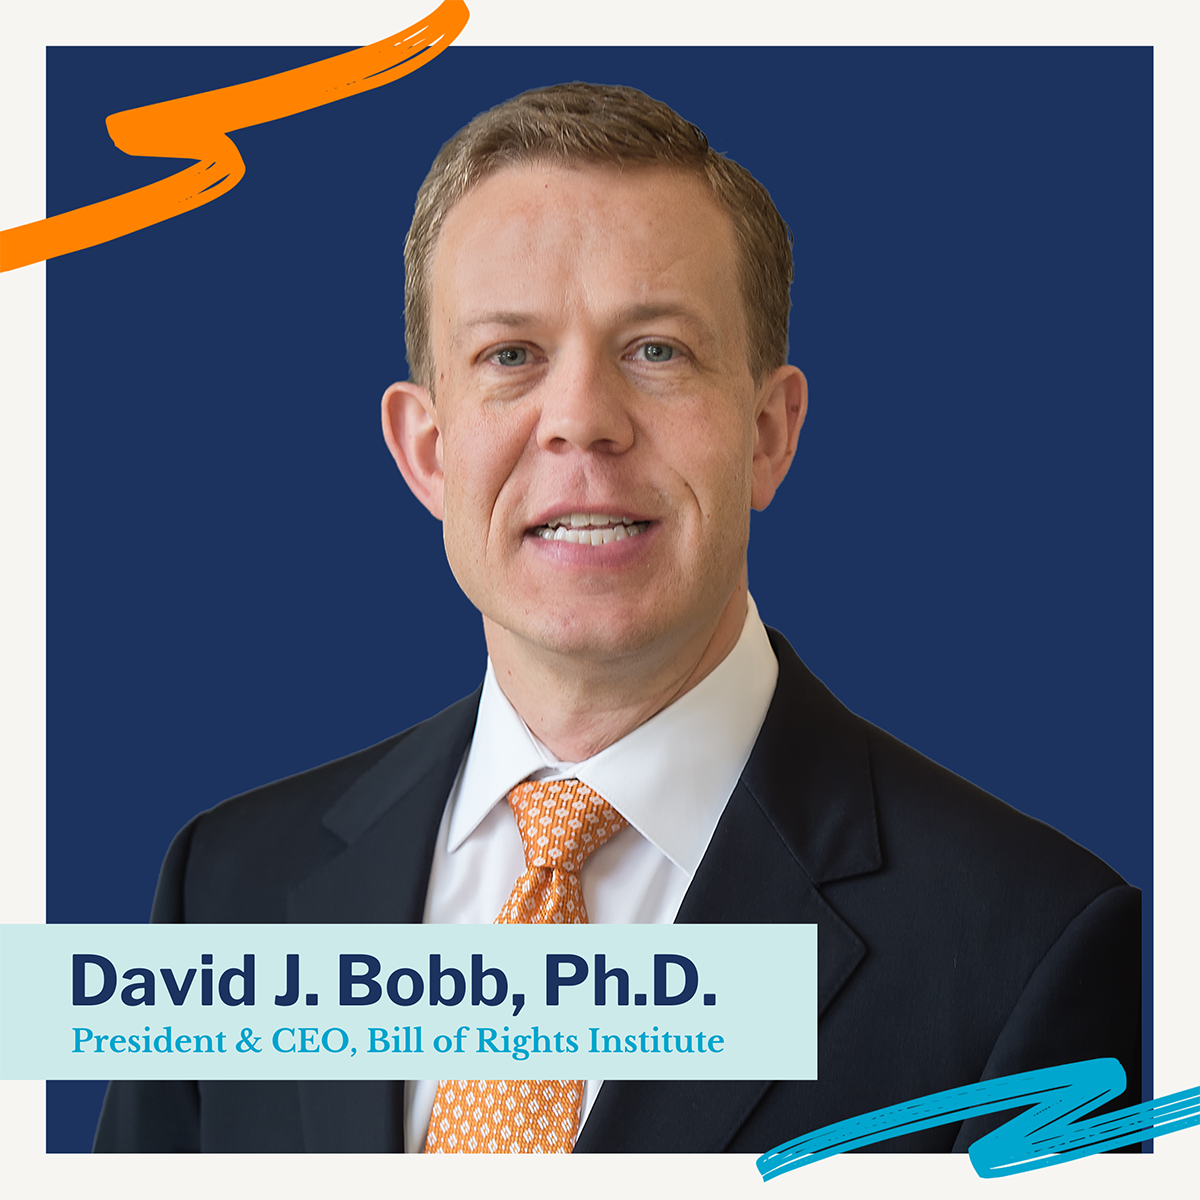 David J. Bobb, Ph.D., President & CEO